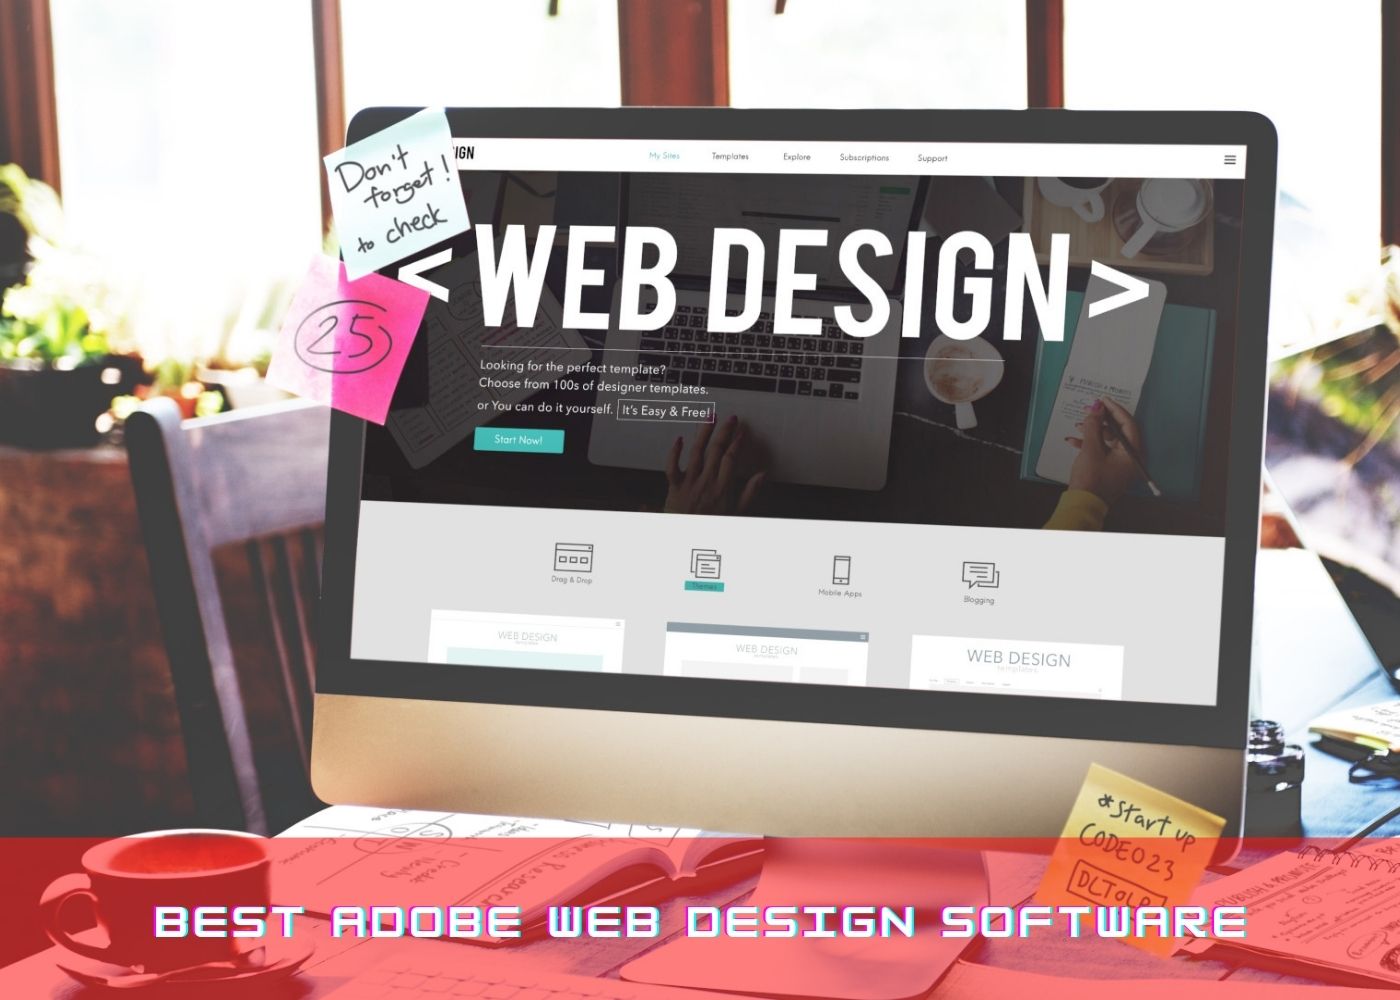 Best Adobe Web Design Software